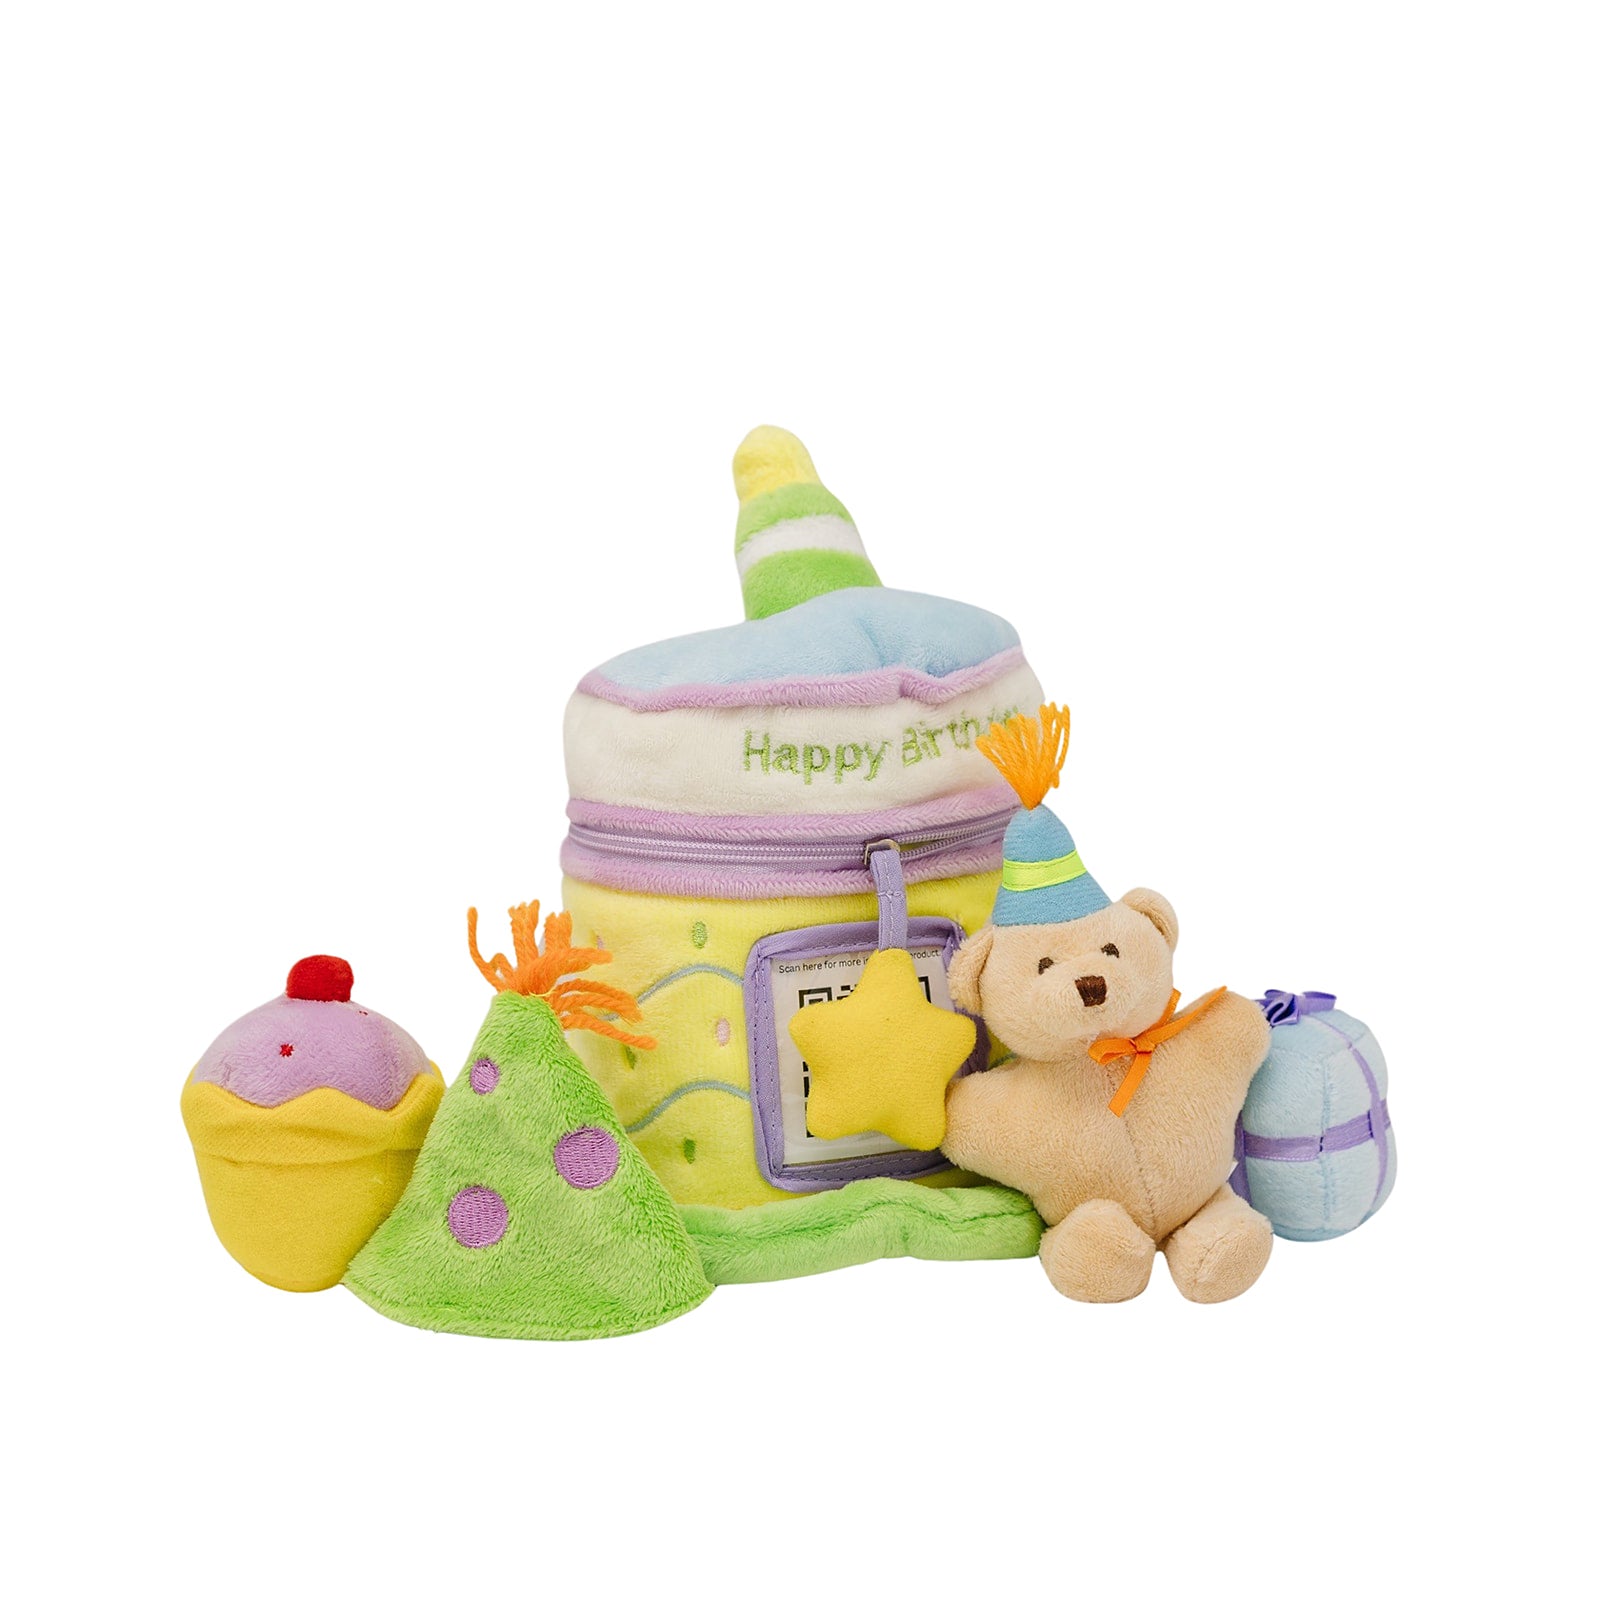 Genius Babies: High Quality, Developmental-Based Toys for Babies